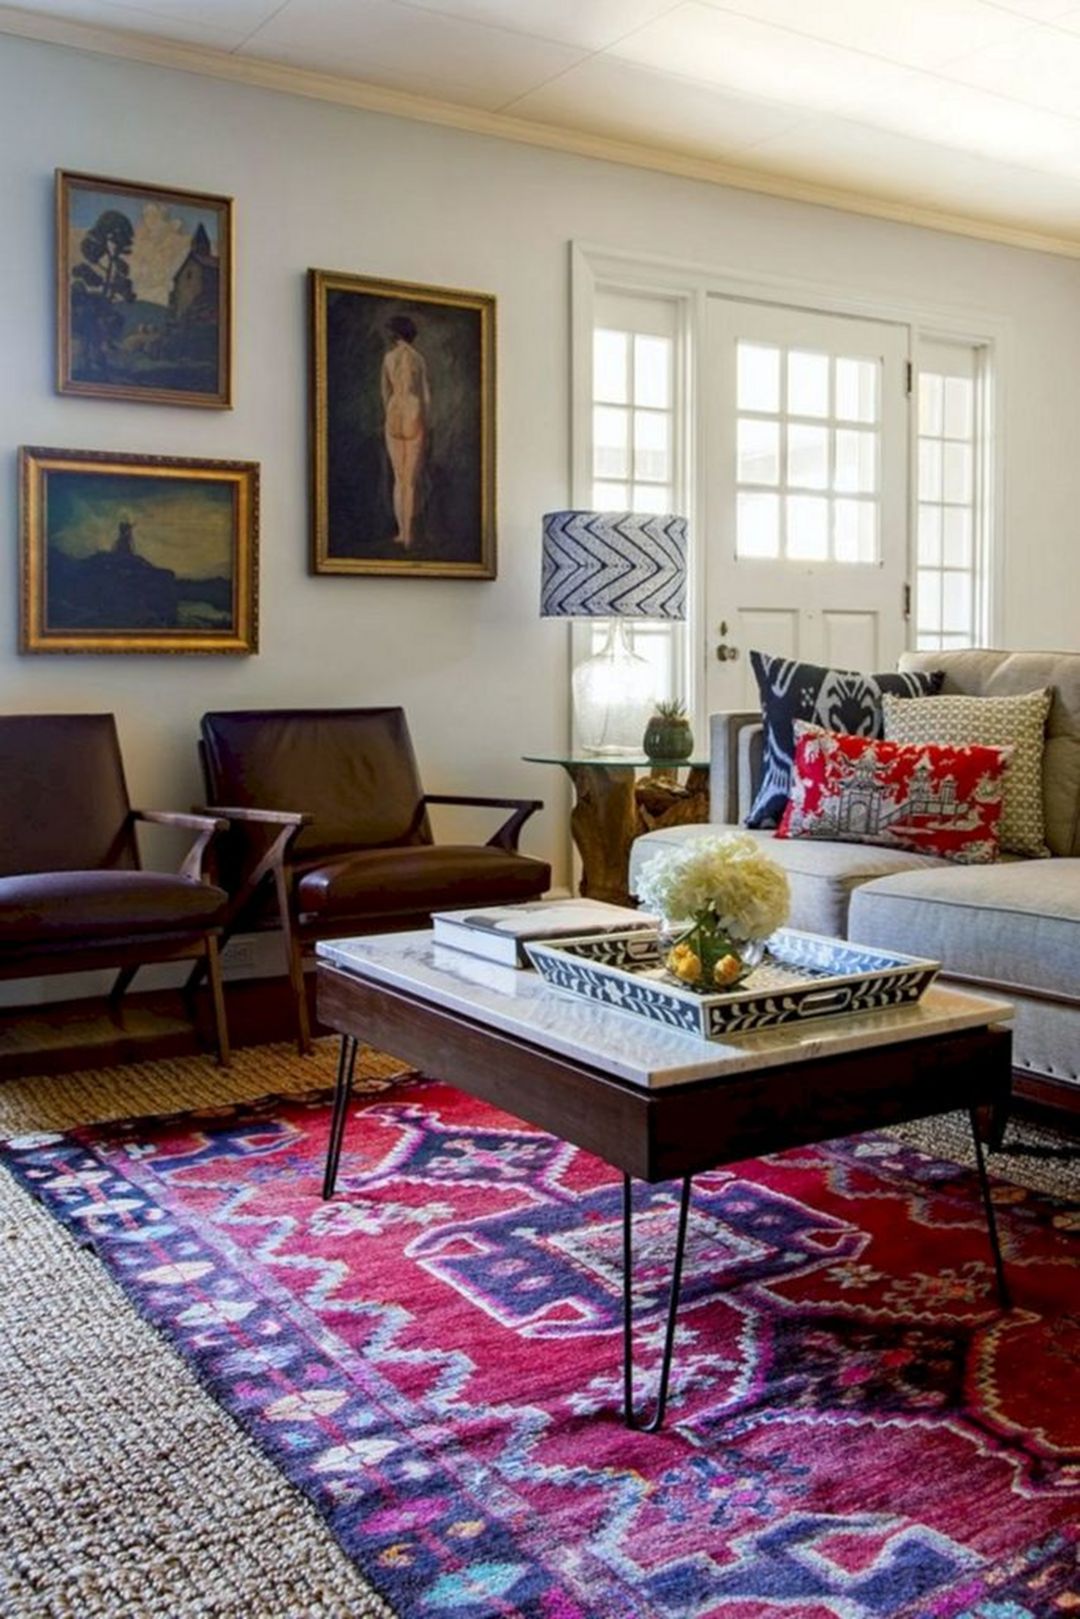 Living Room Carpet Ideas